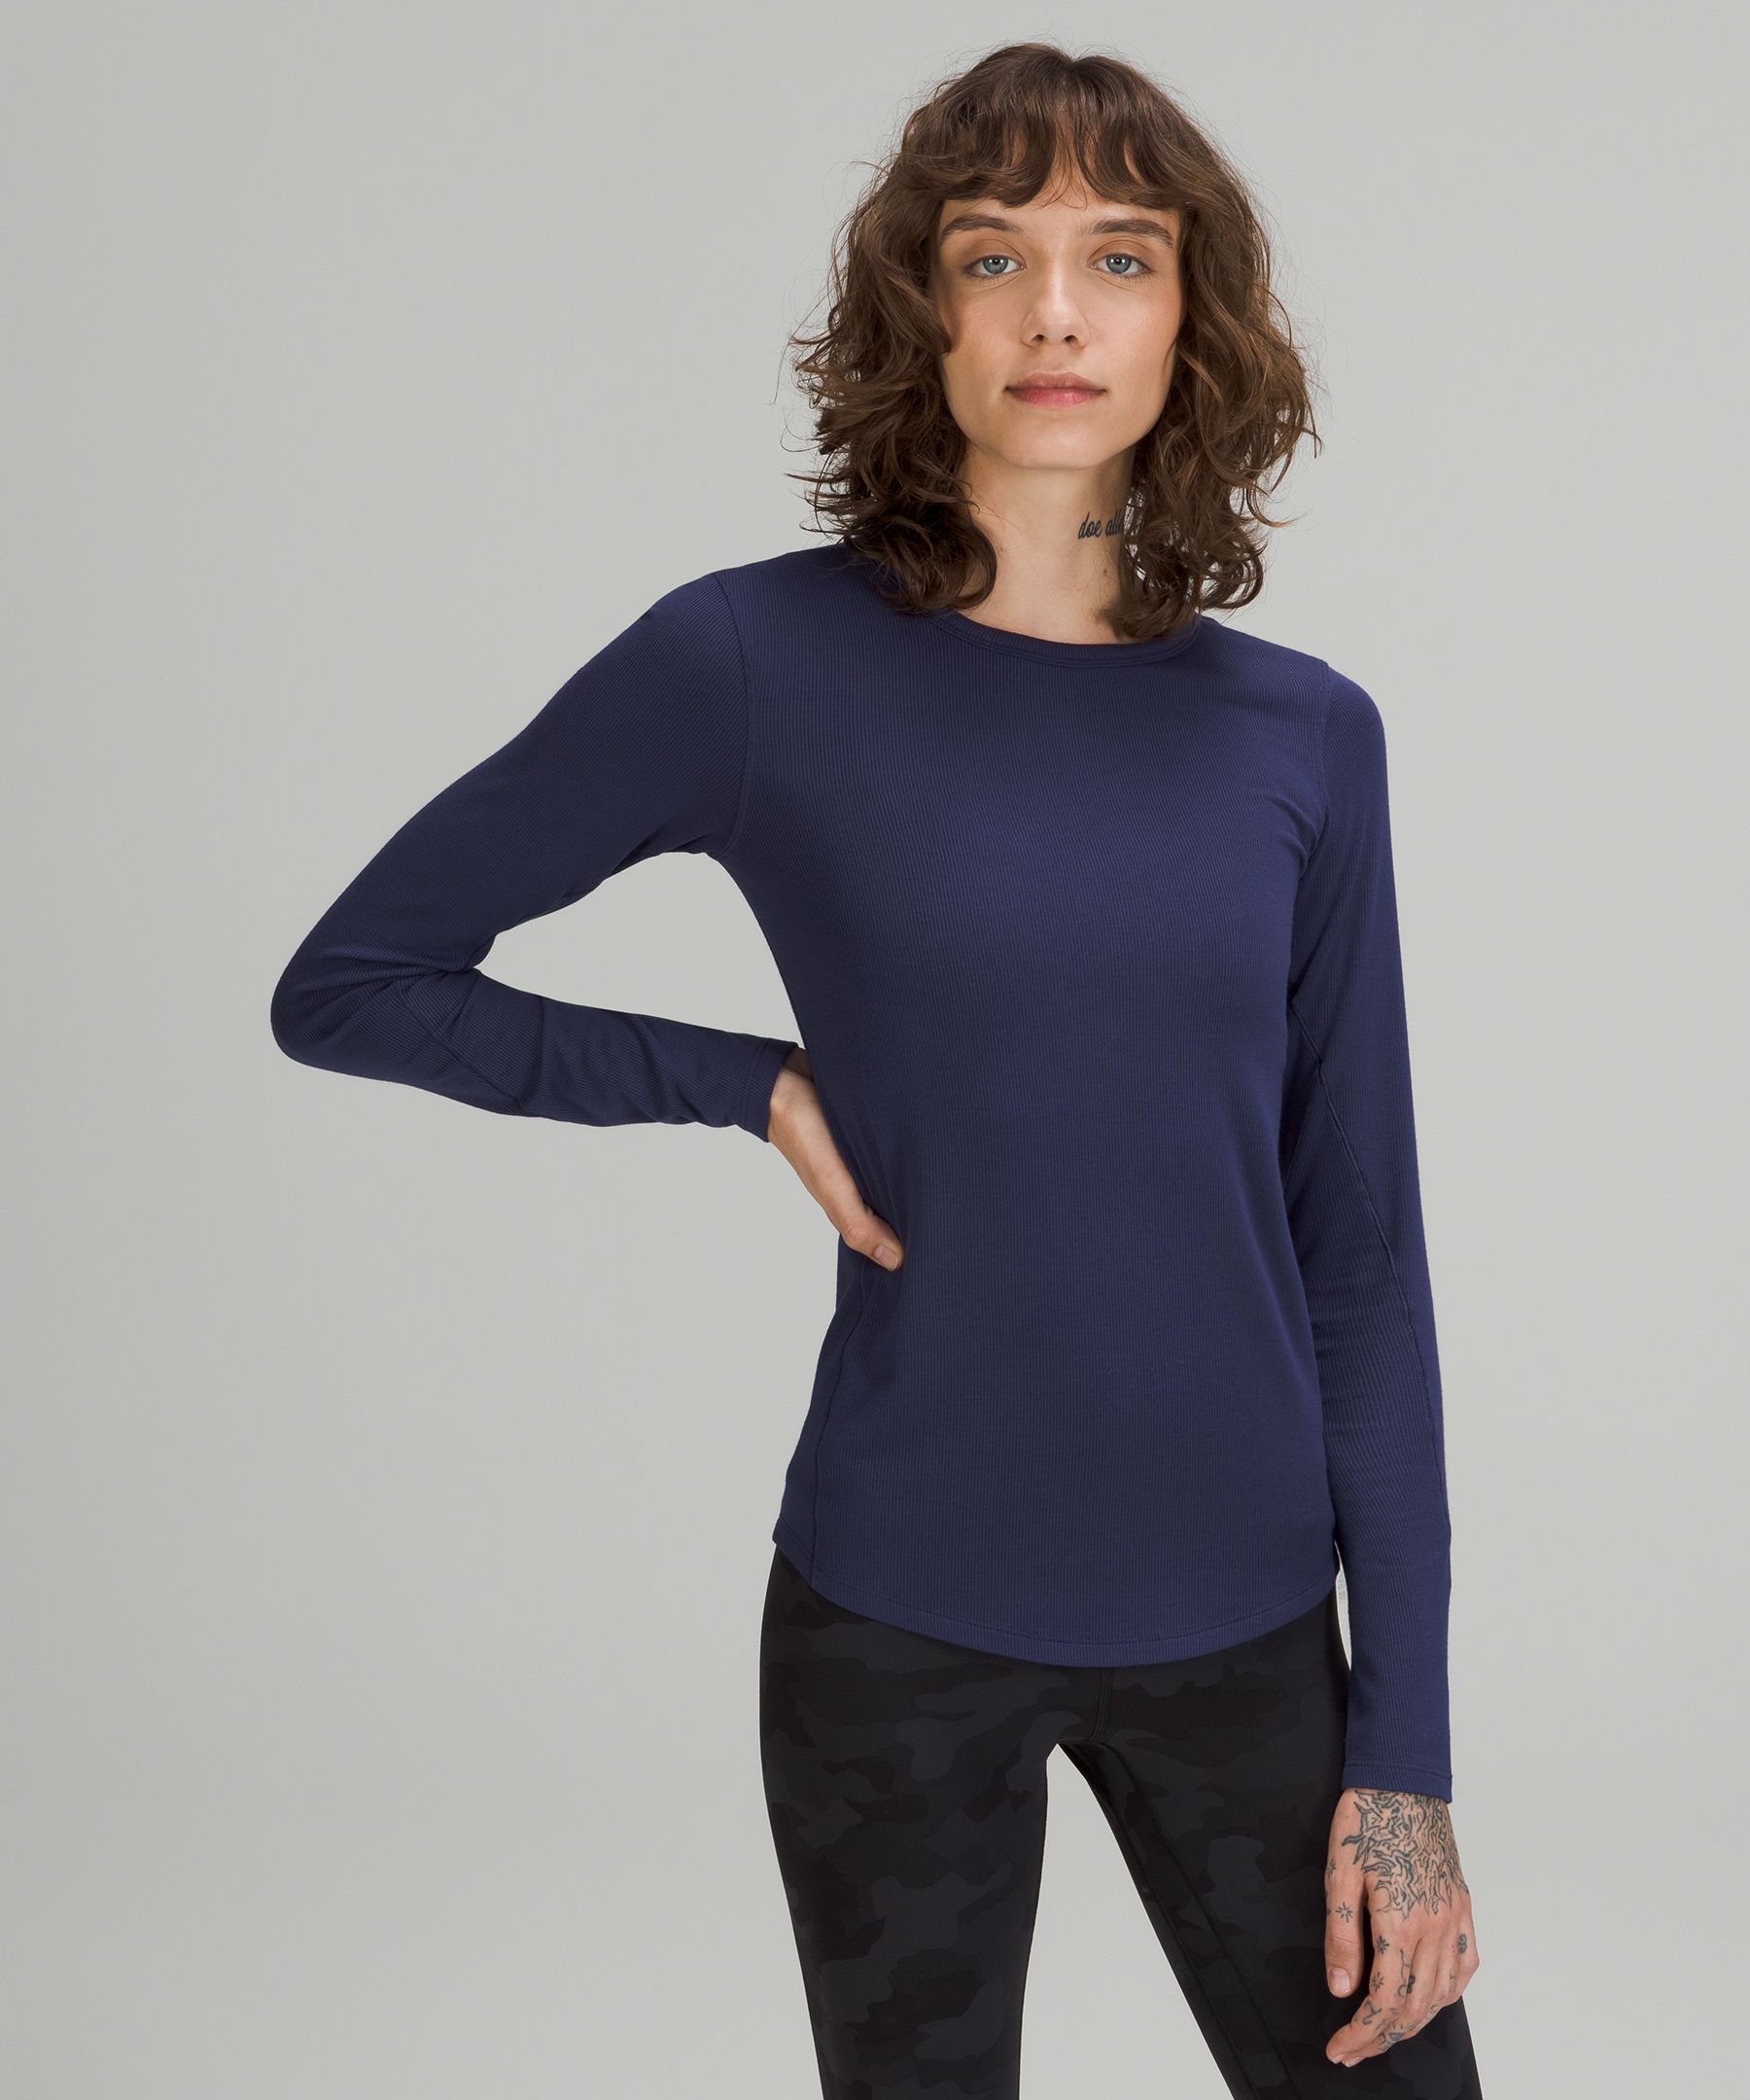 Hold Tight Long-Sleeve Shirt, Women's Long Sleeve Shirts